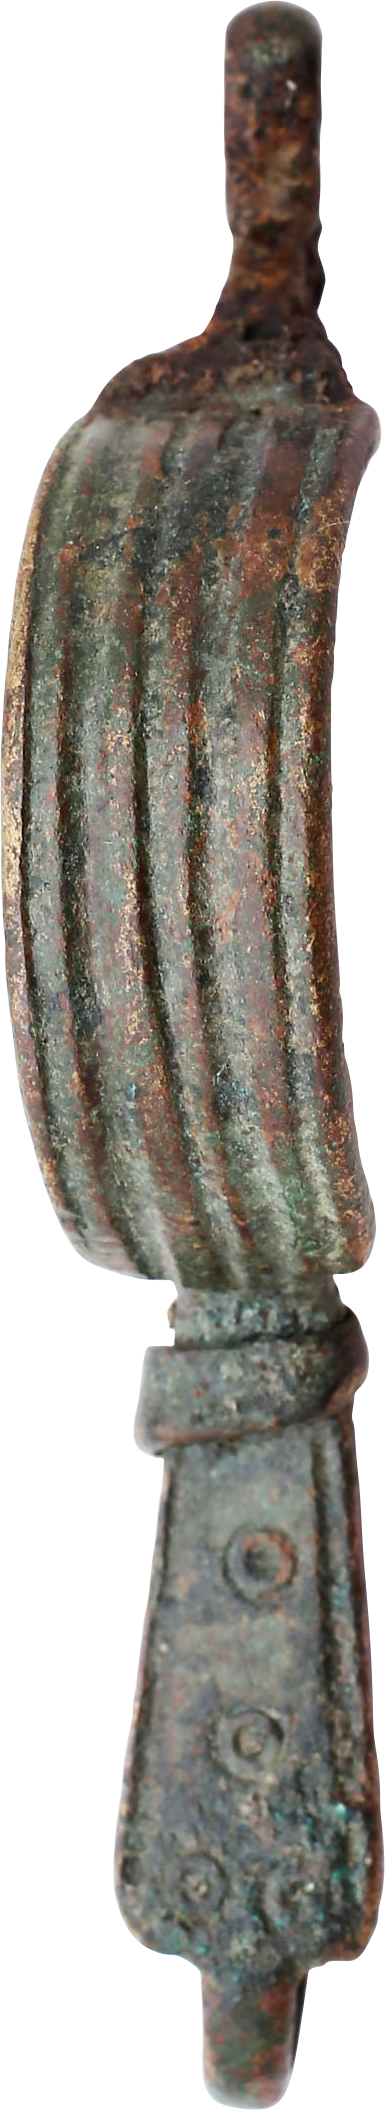 ANCIENT ROMAN BROOCH (GARMENT PIN) FIBULA, 250-350 AD - Fagan Arms